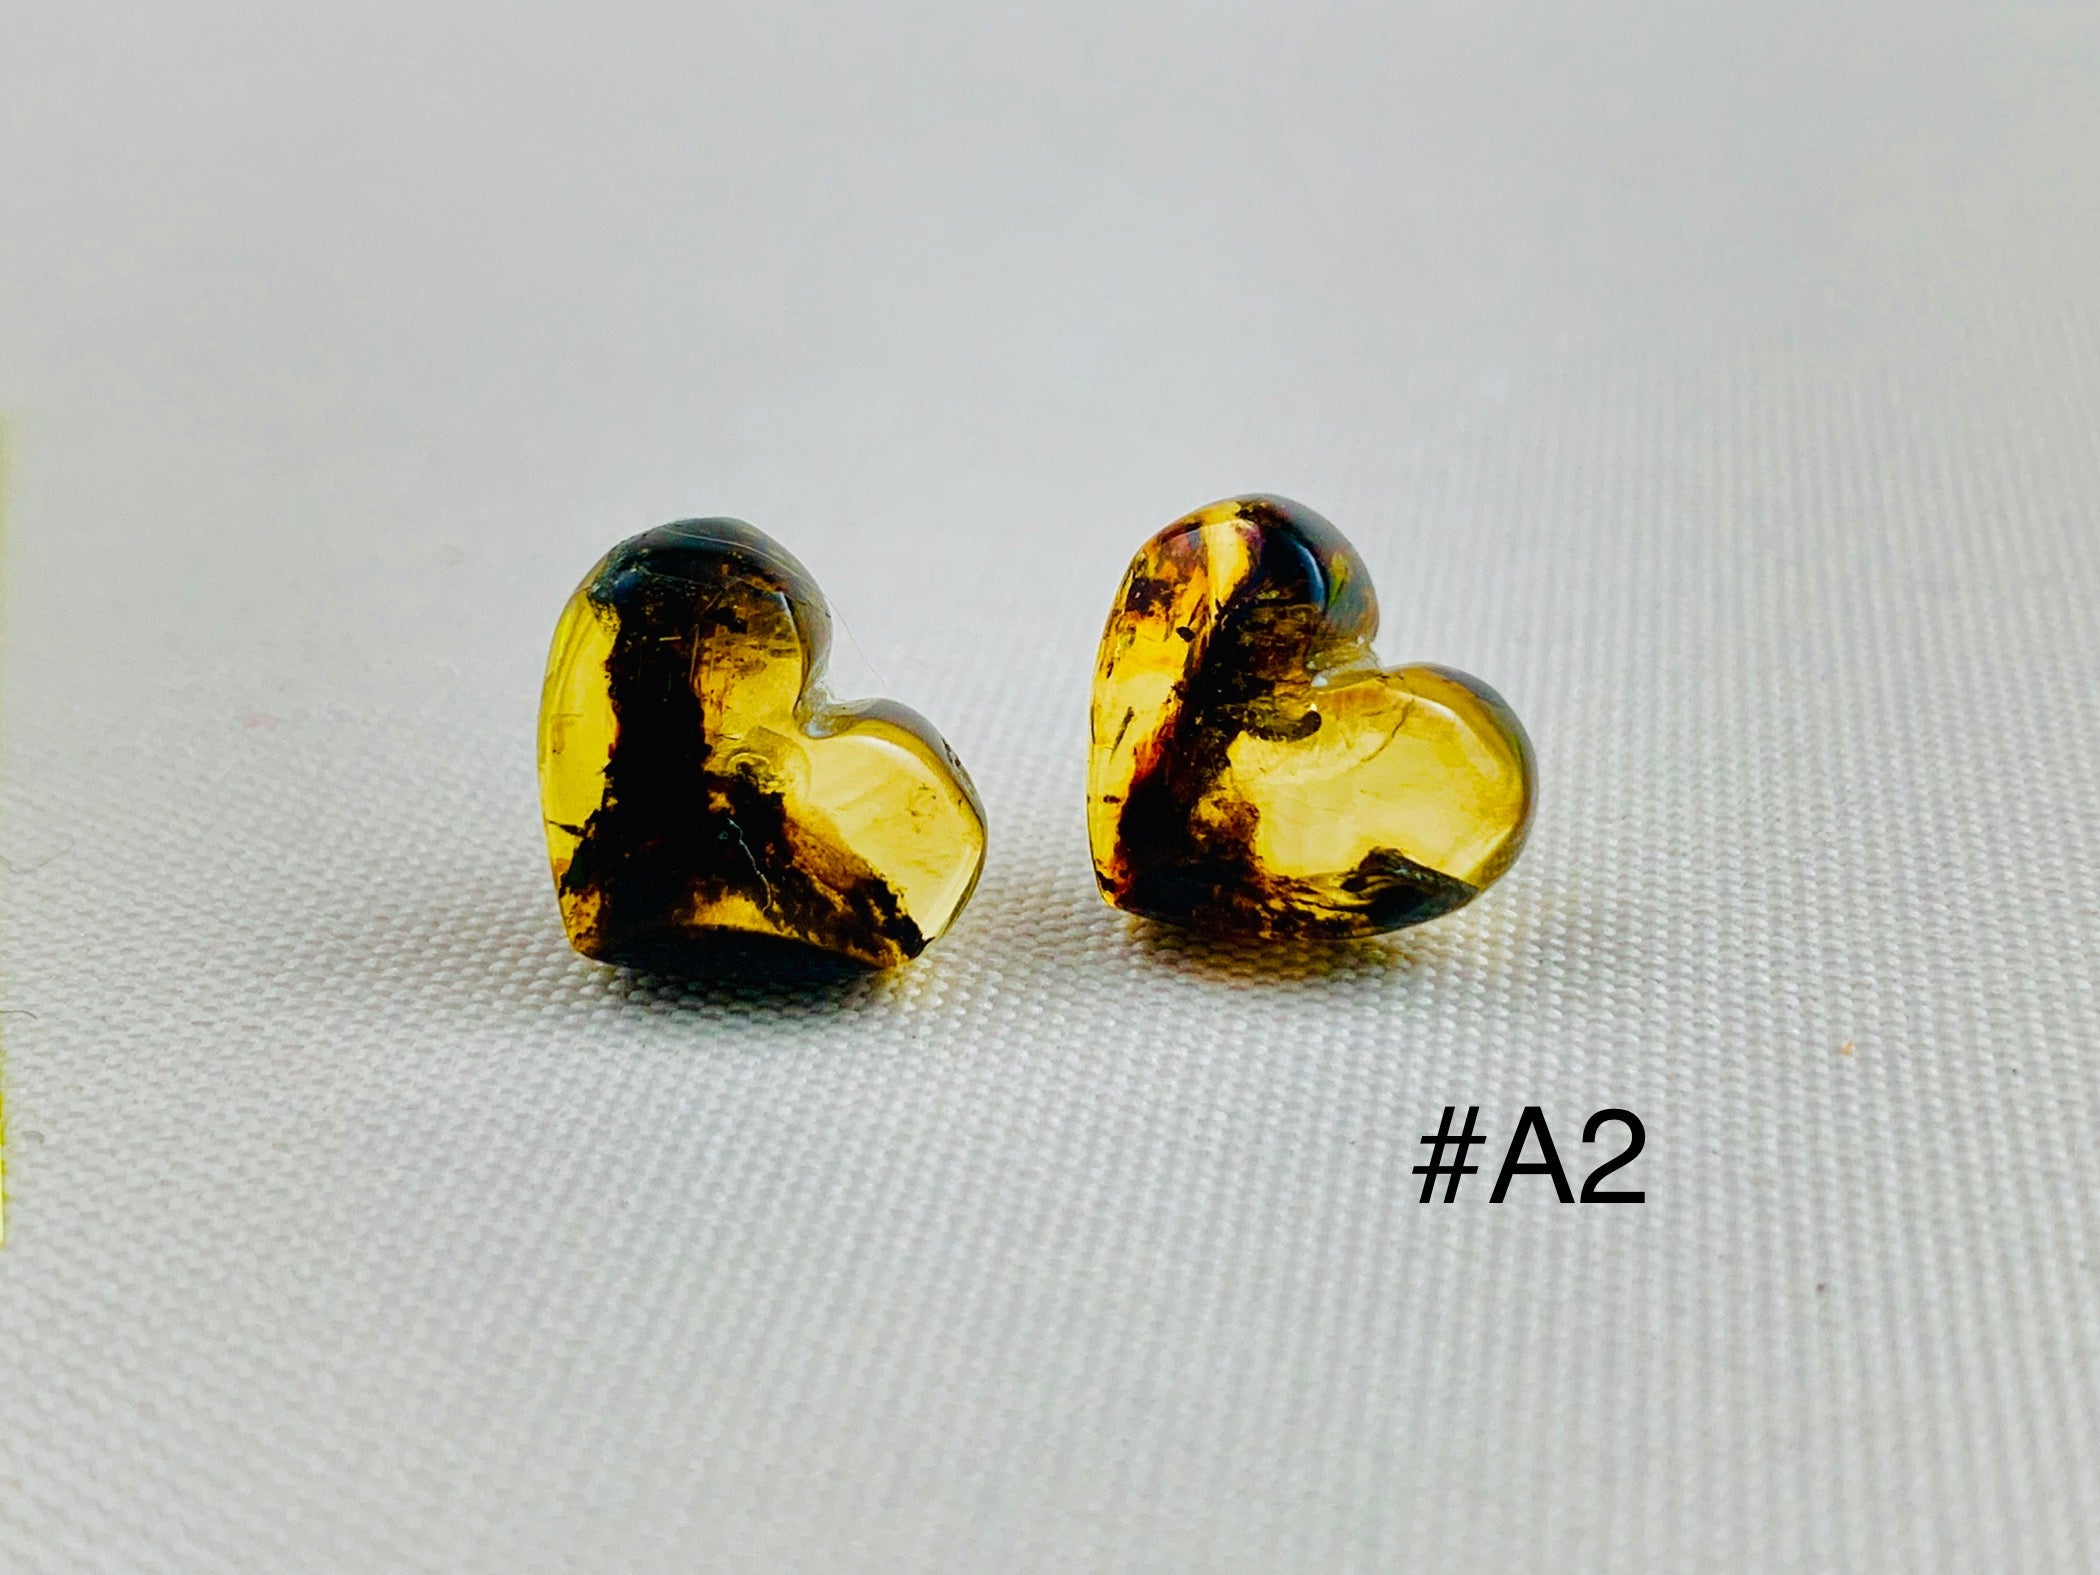 Chiapas Amber Earrings